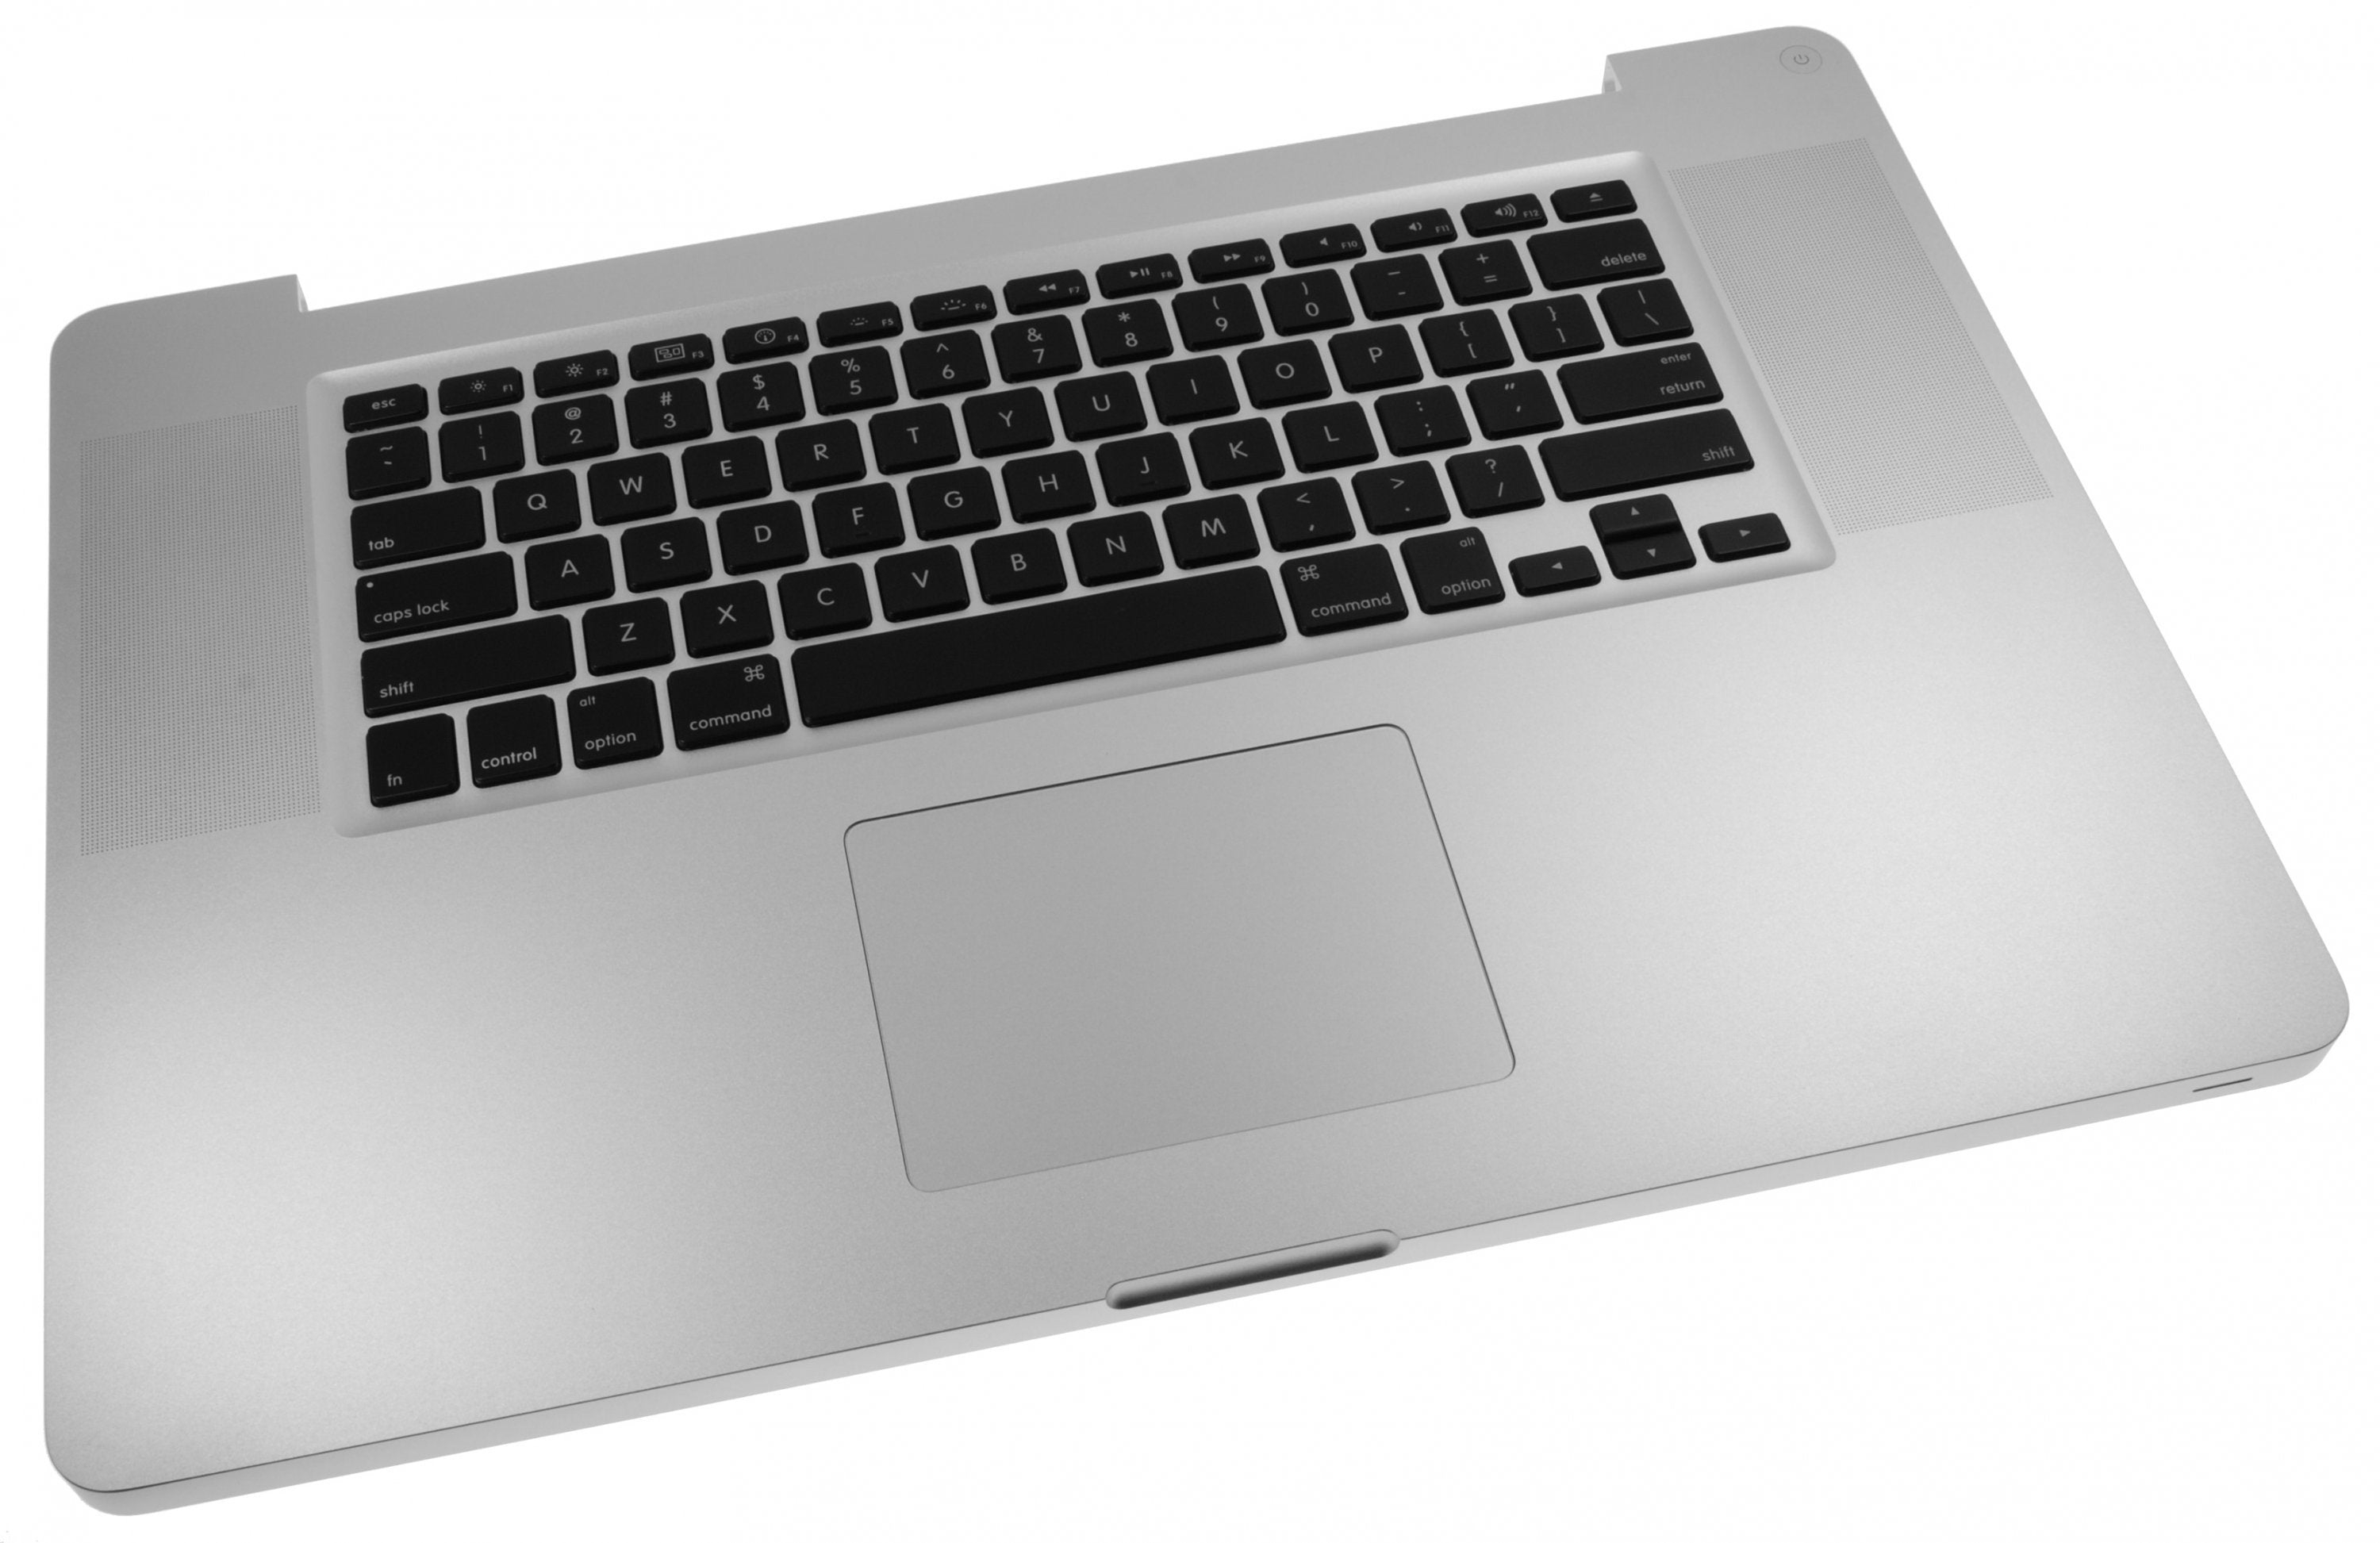 MacBook Pro 17" Unibody (Early-Mid 2009) Upper Case